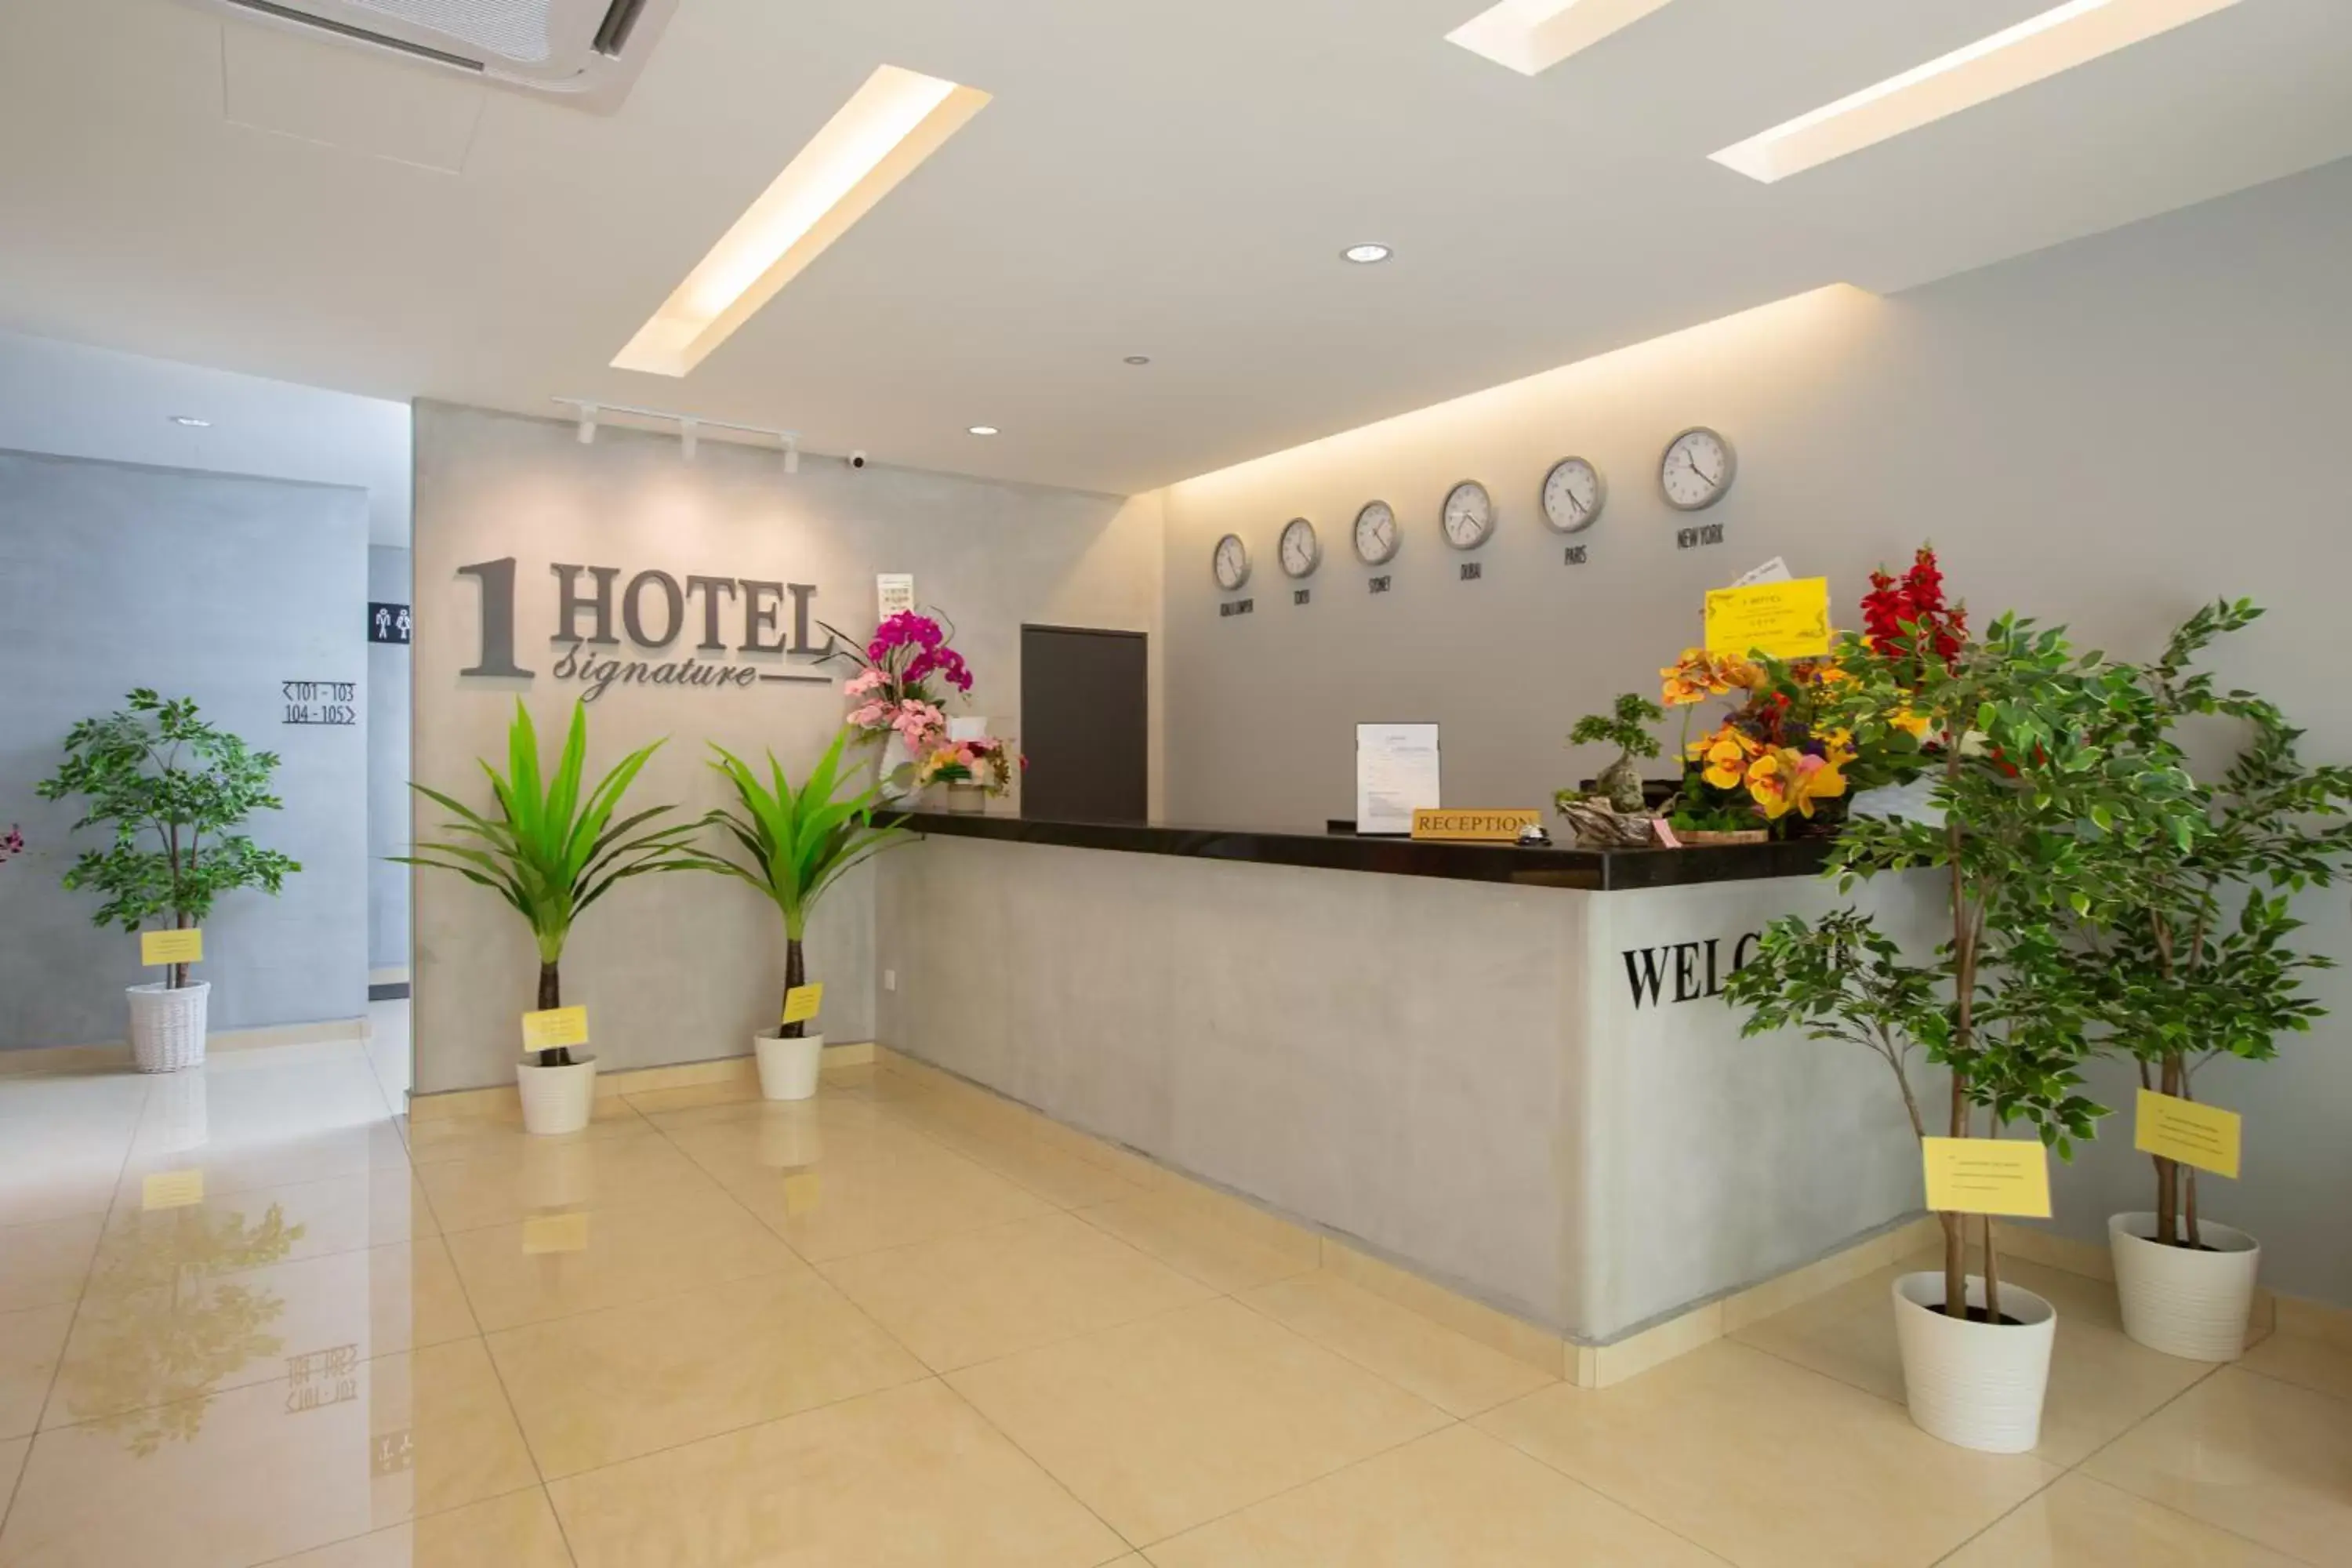 Lobby or reception, Lobby/Reception in 1 Hotel Signature